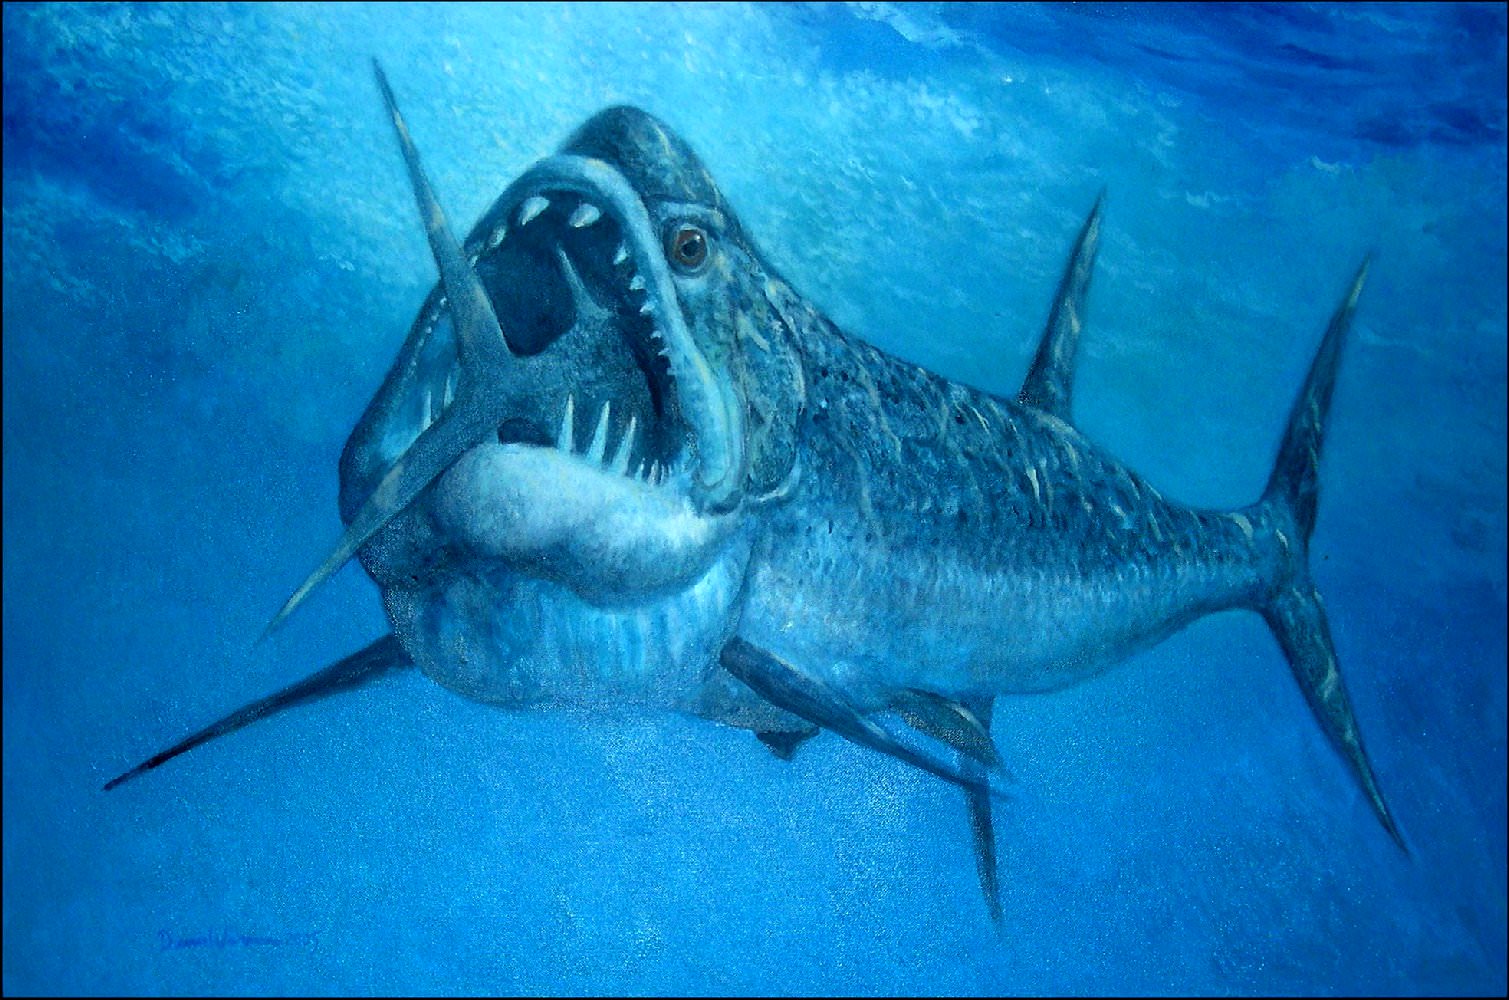 random prehistoric fish